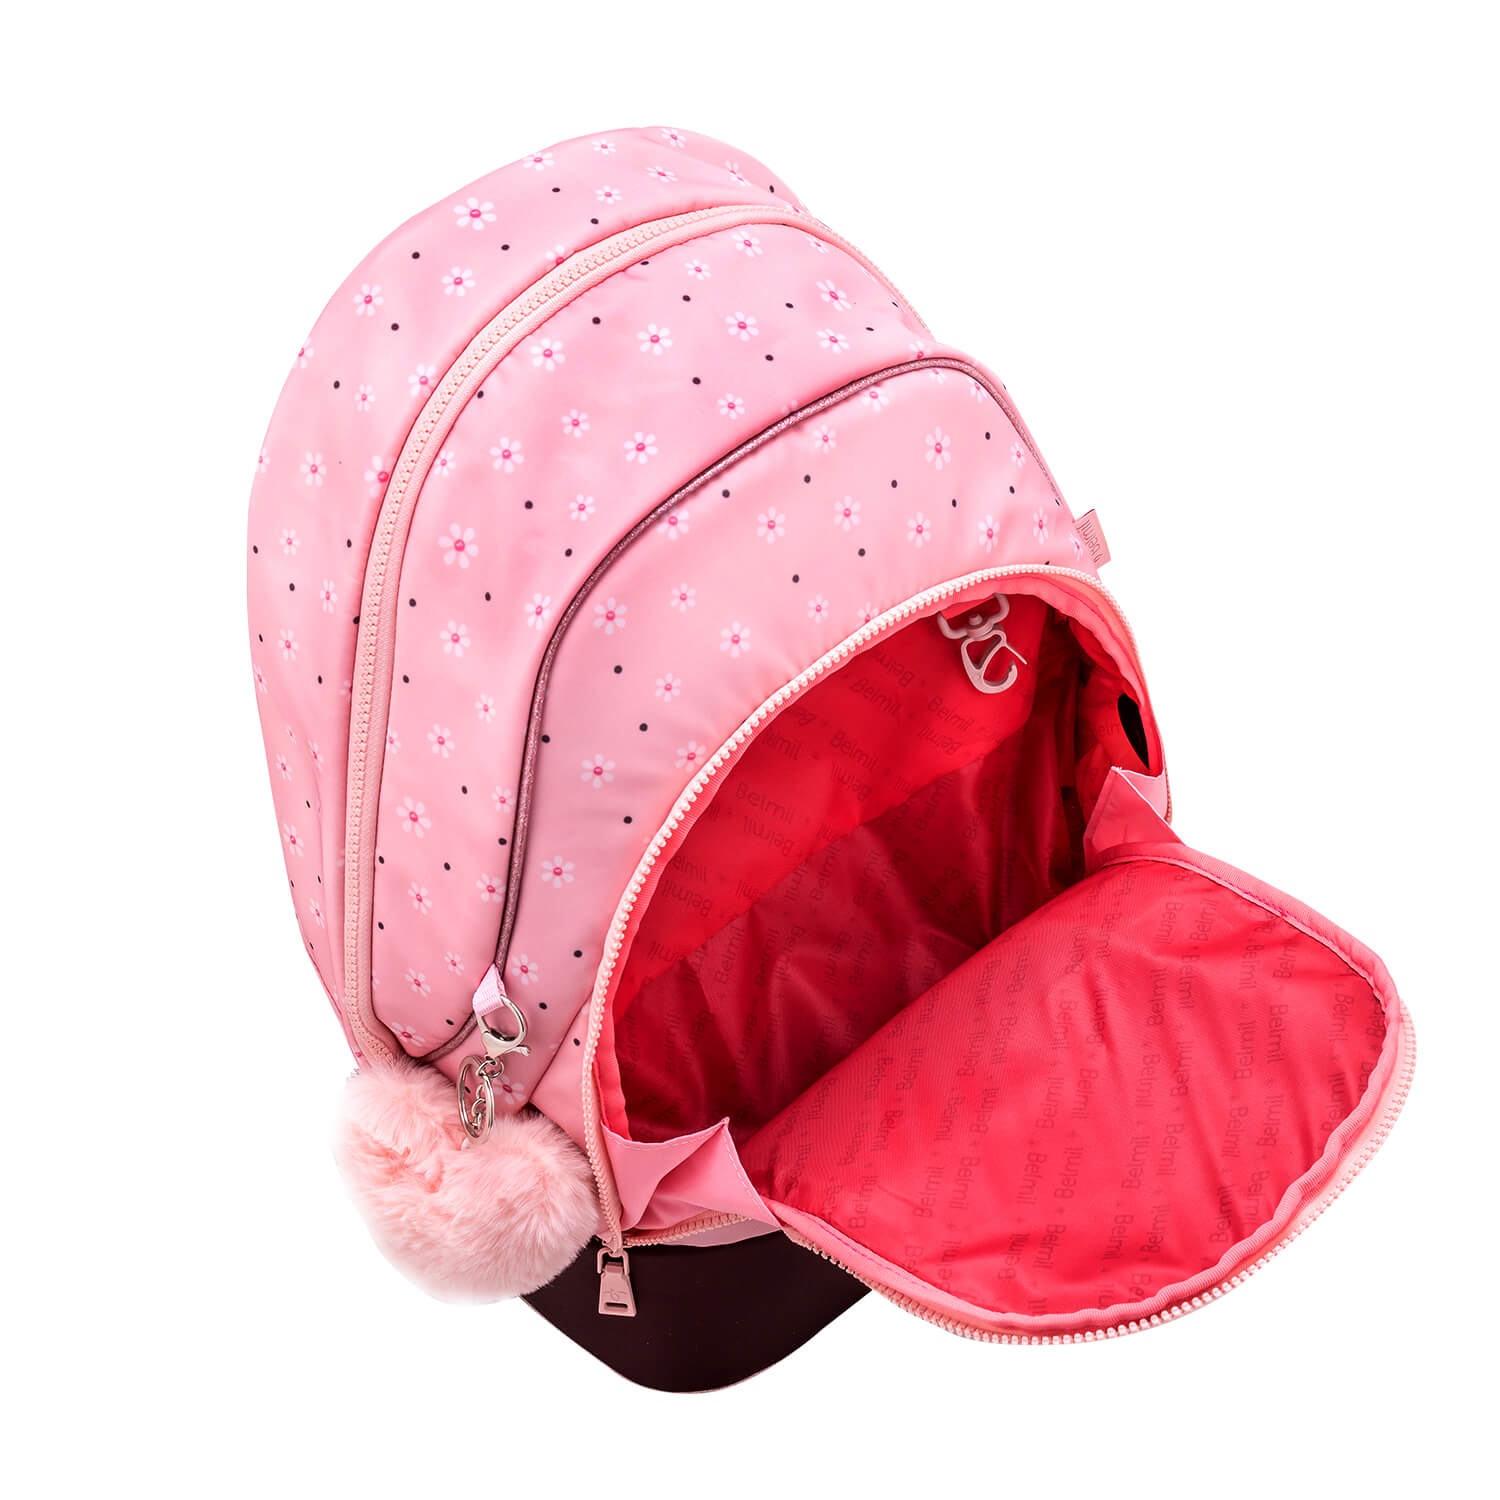 Premium Backpack & Fanny Pack Cherry Blossom Schoolbag 2pcs.